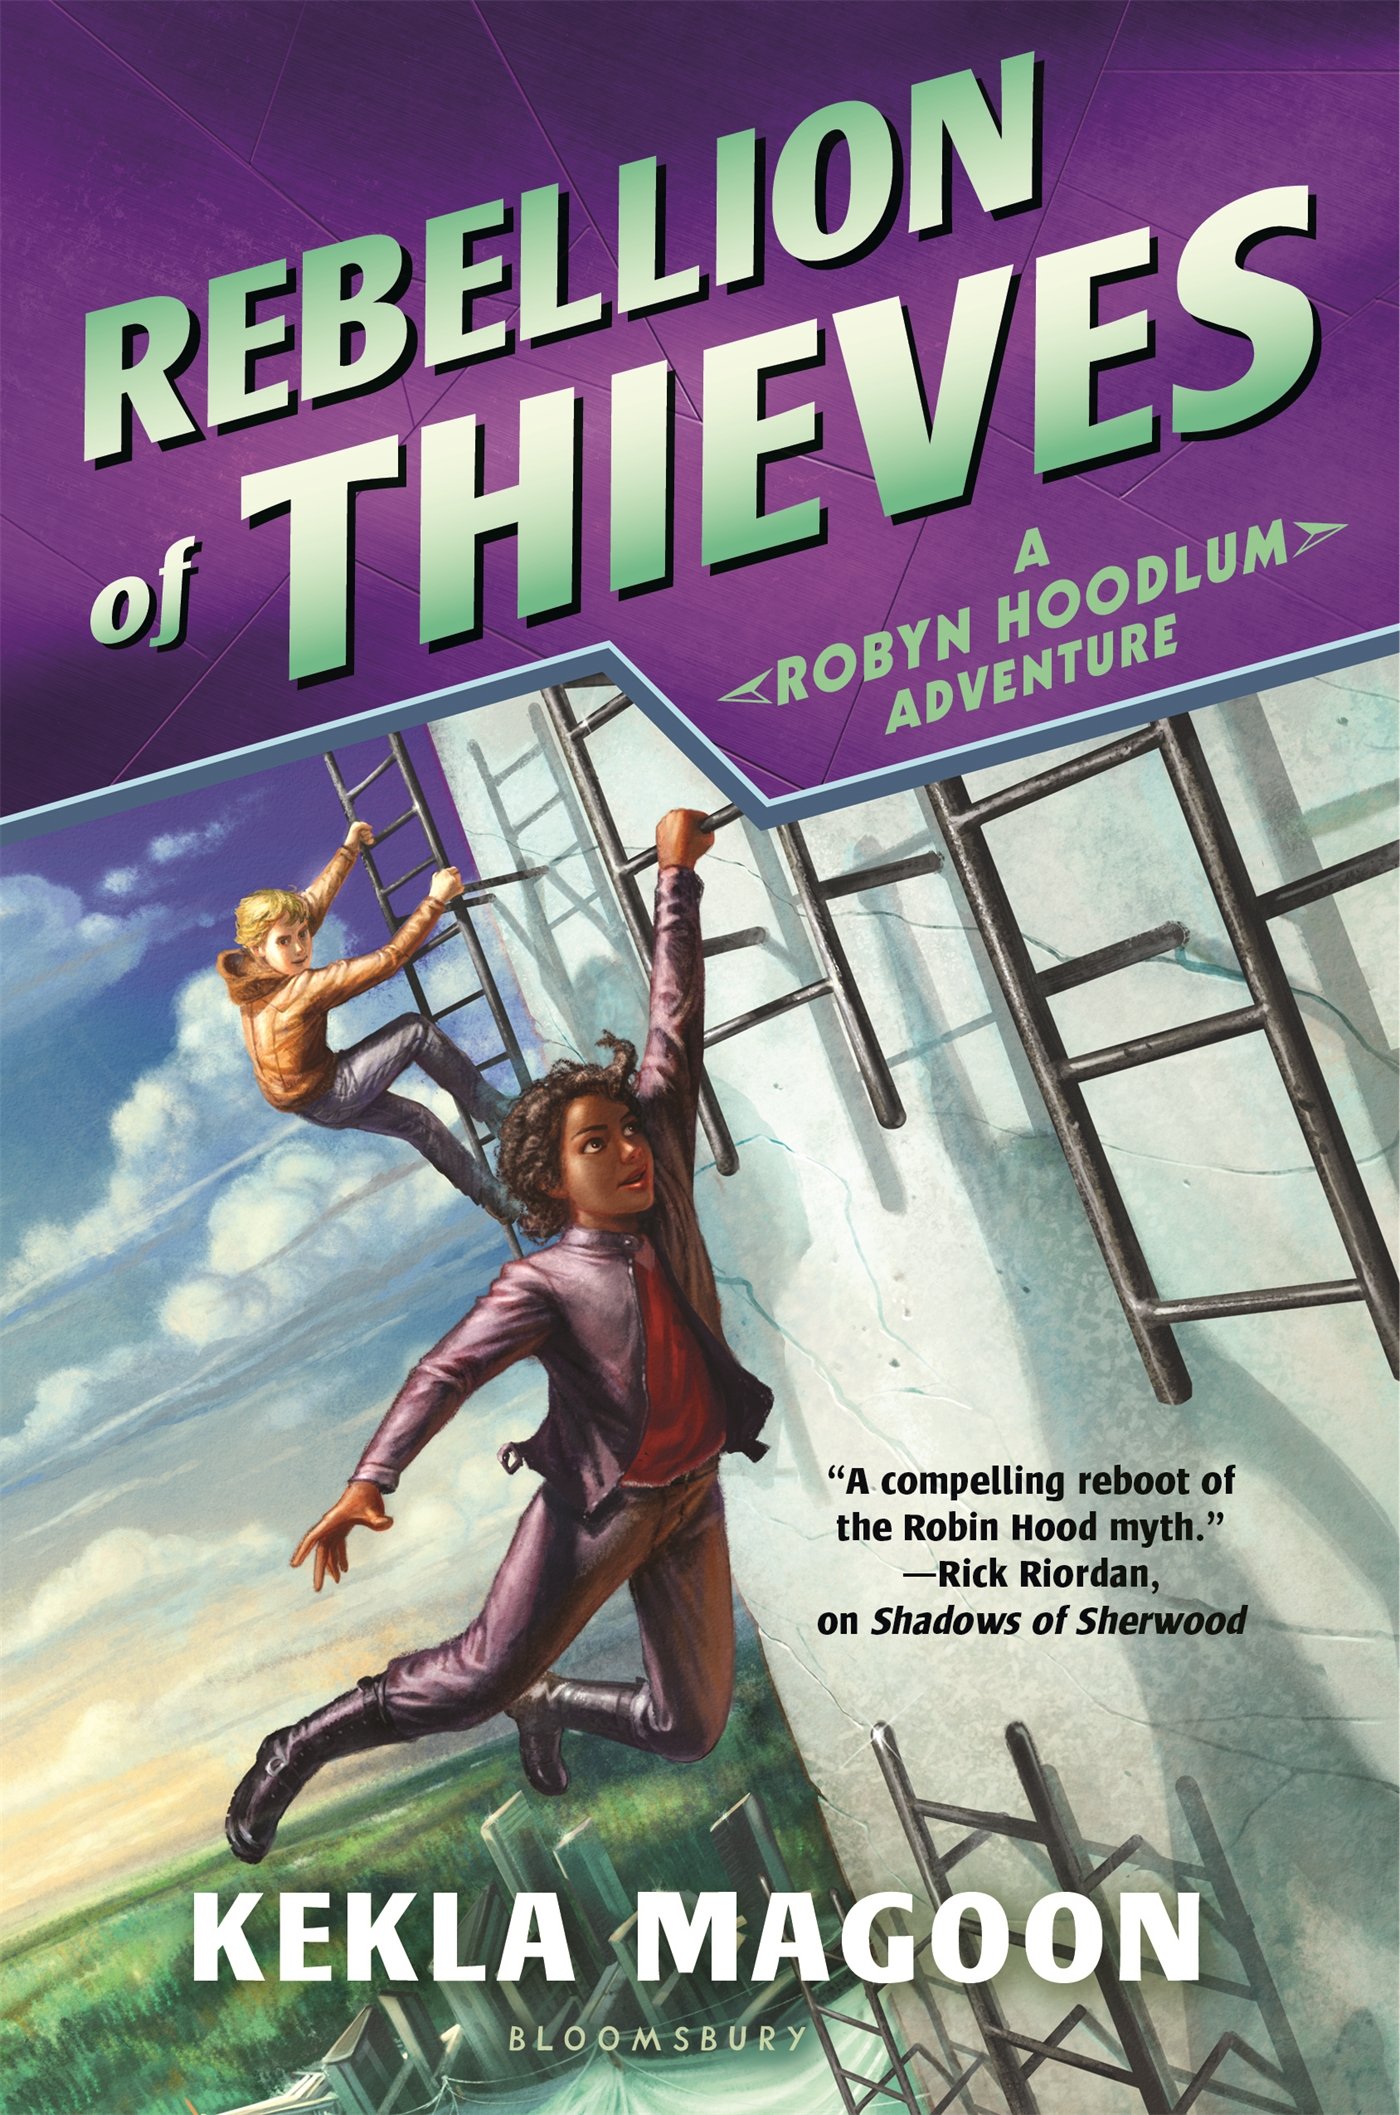 Rebellion of Thieves (A Robyn Hoodlum Adventure) - Kekla Magoon 